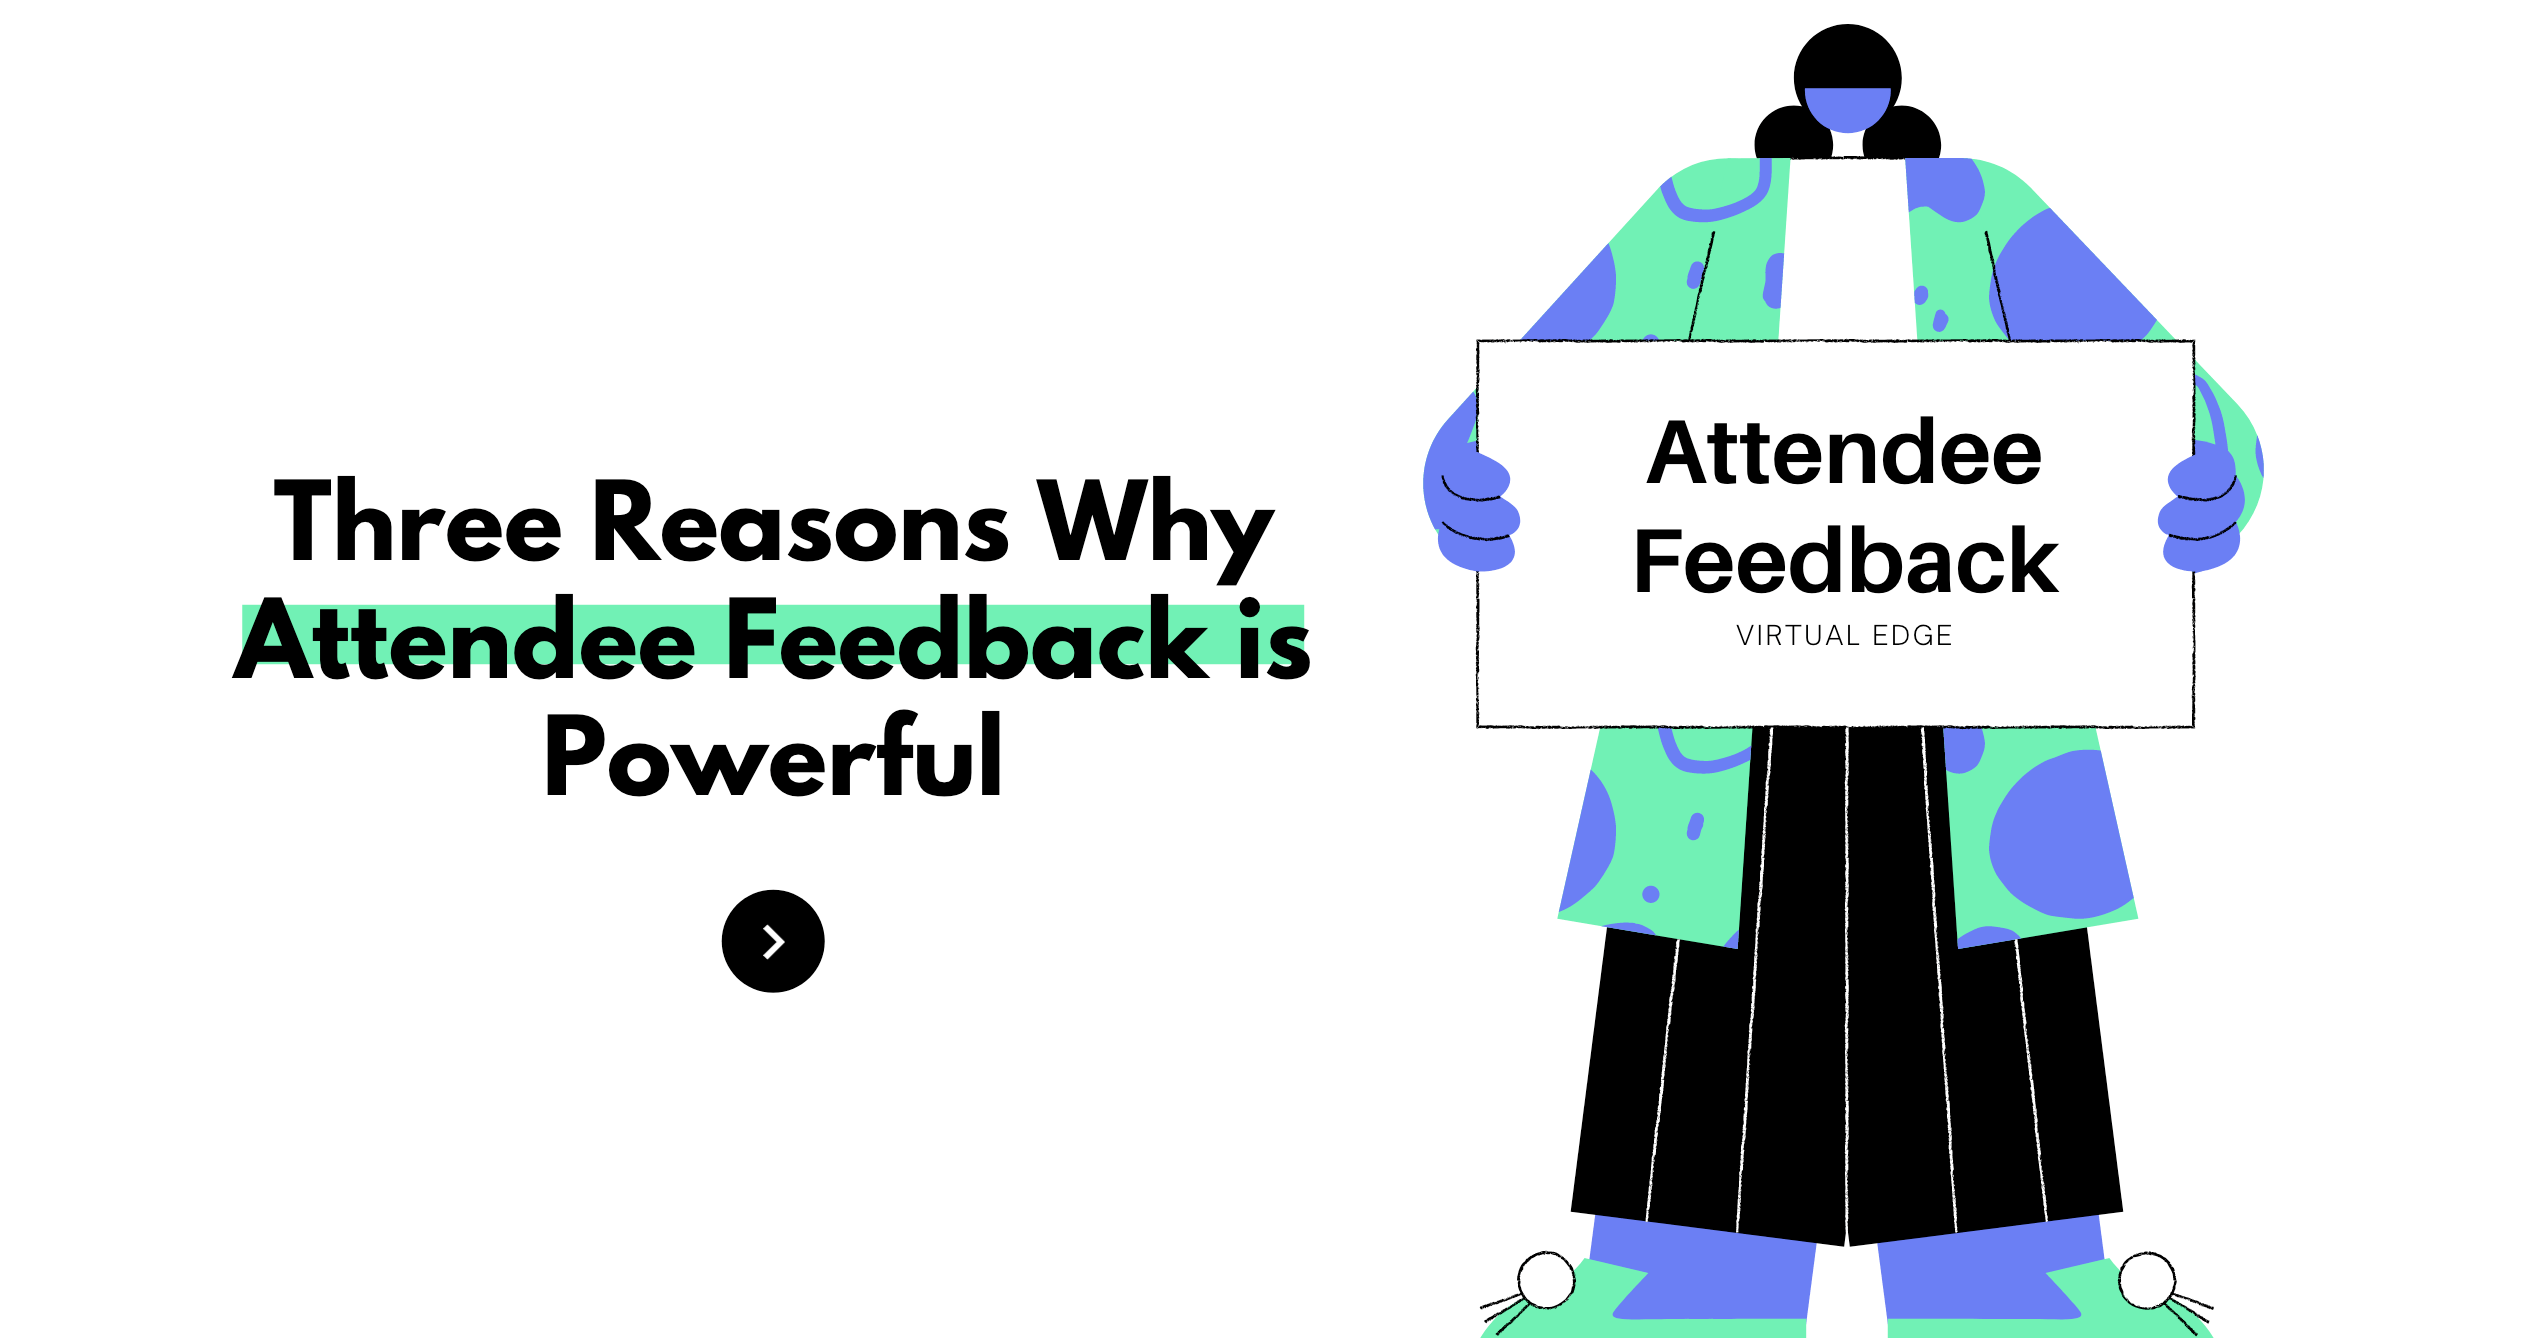 Three Reasons Why Attendee Feedback is Powerful